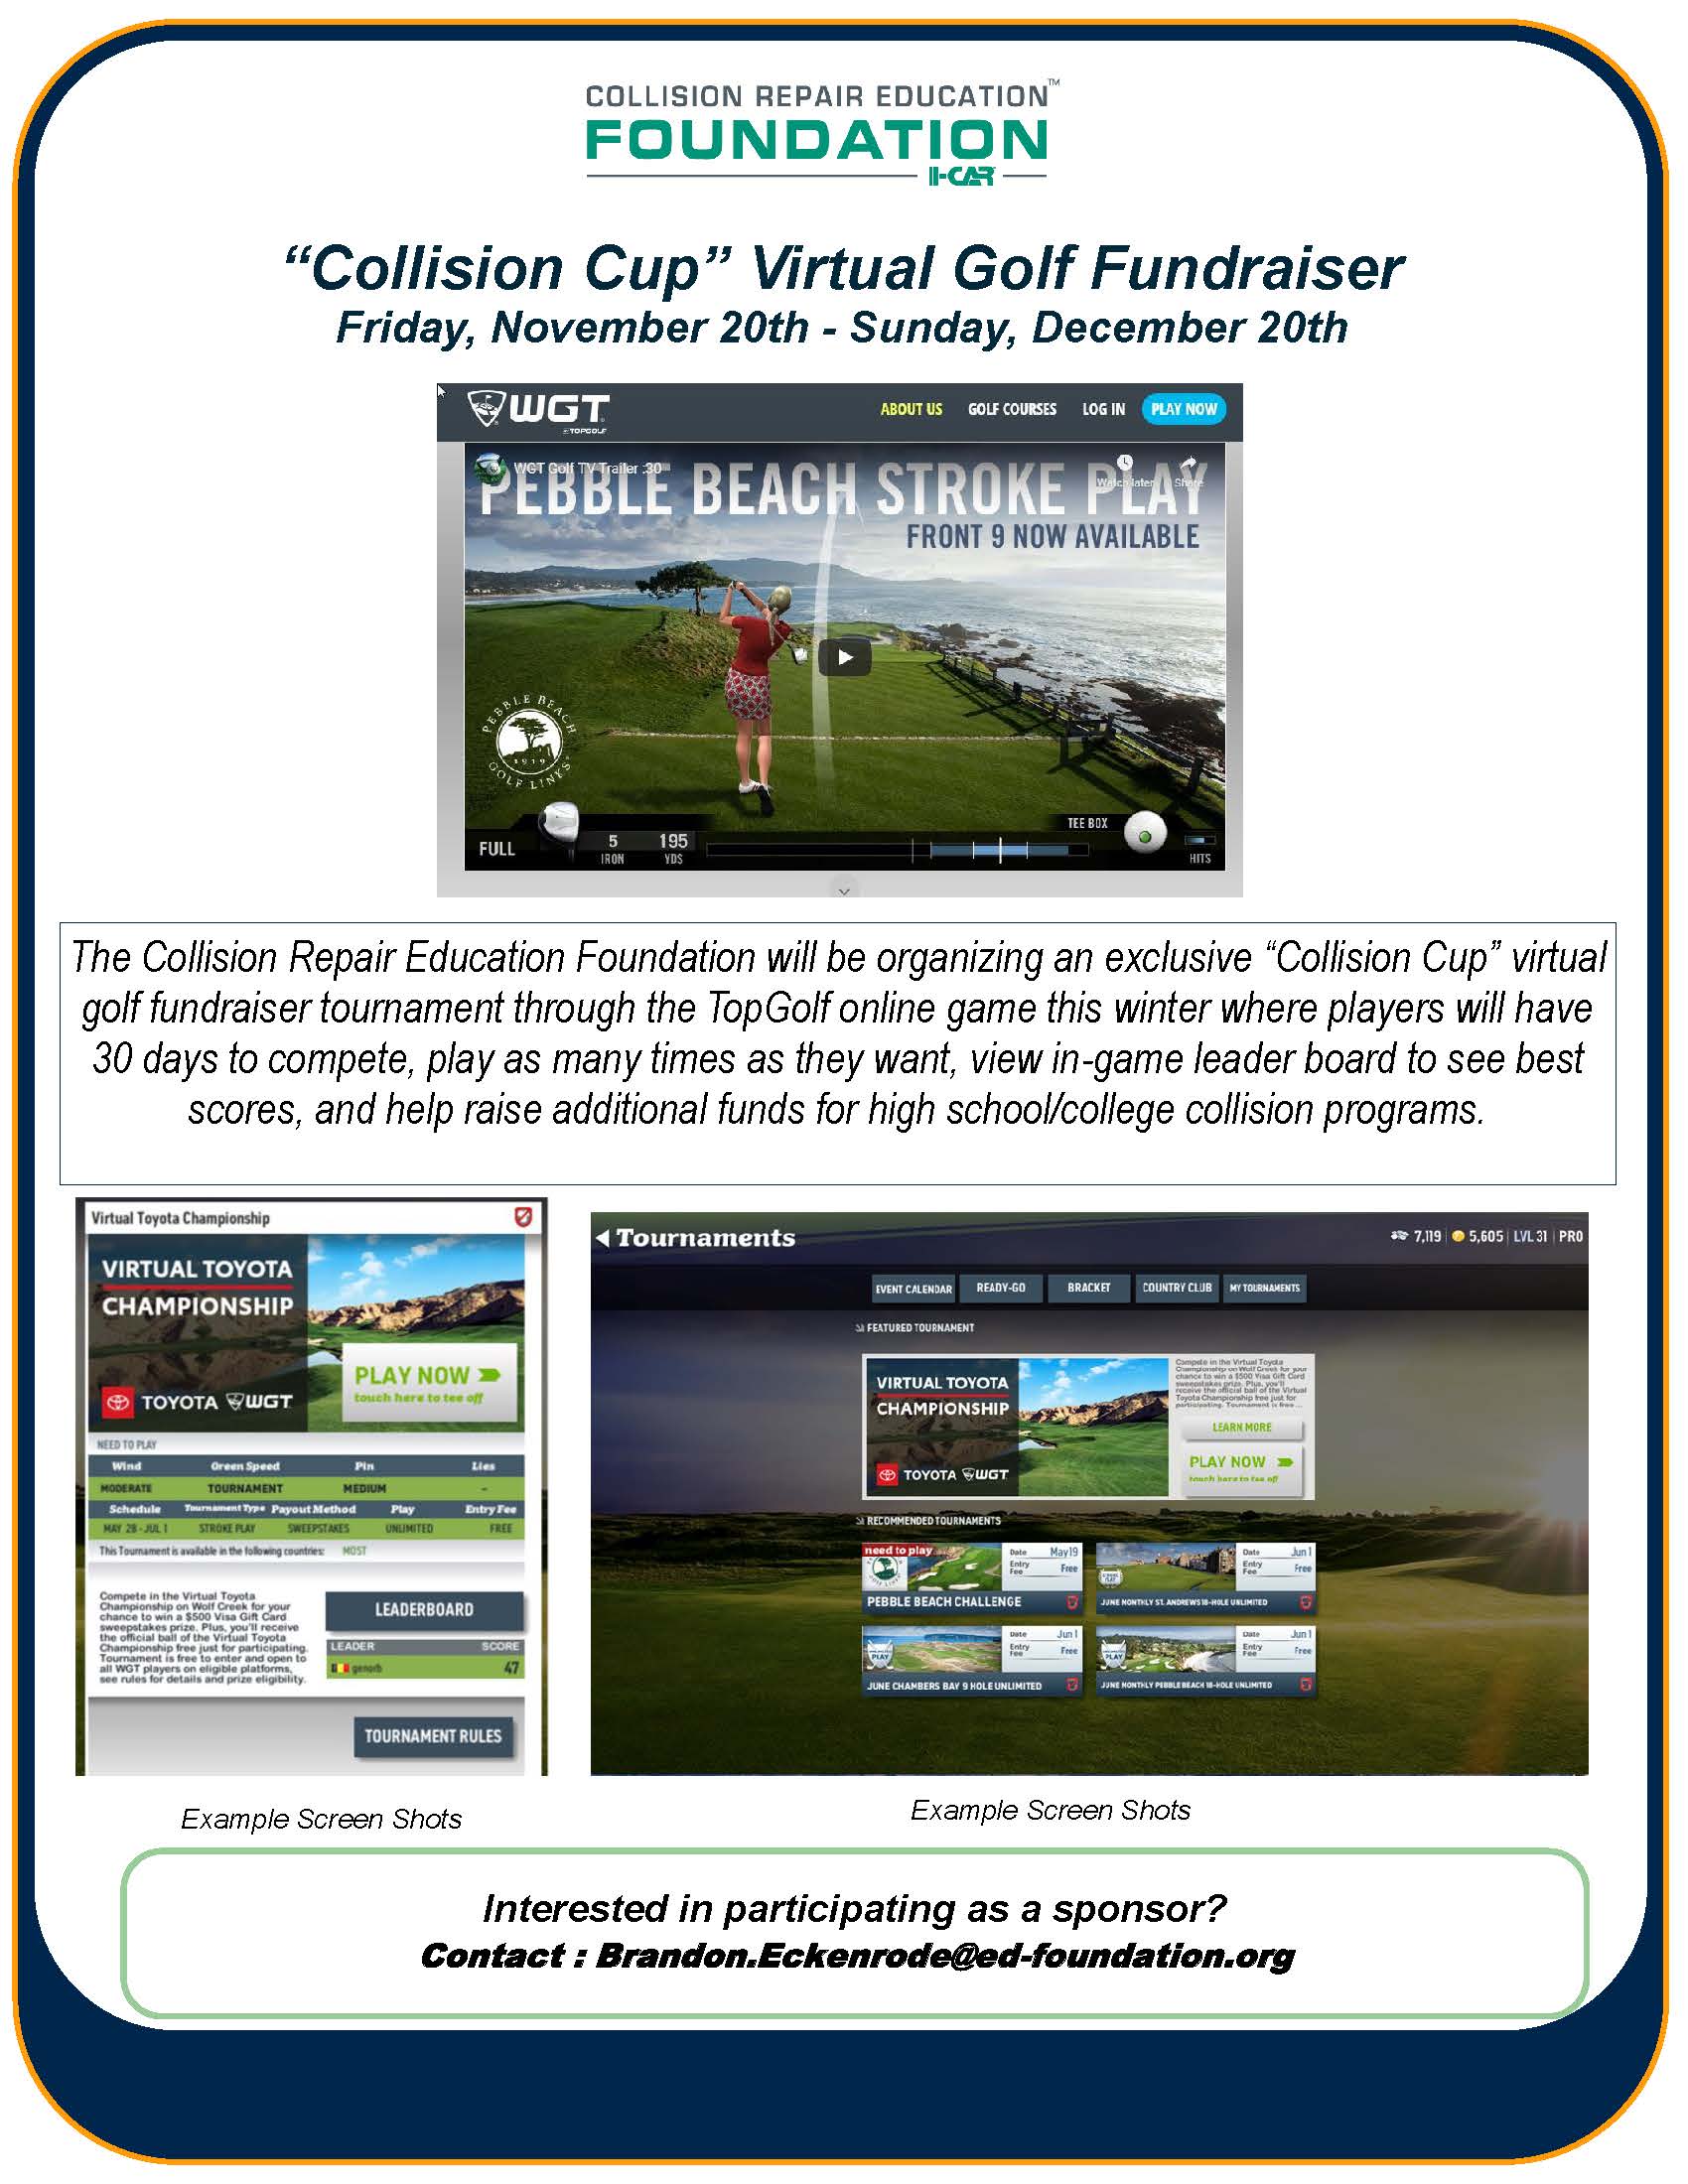 CREF Virtual Golf Fundraiser Sponsor Flyer_Page_1